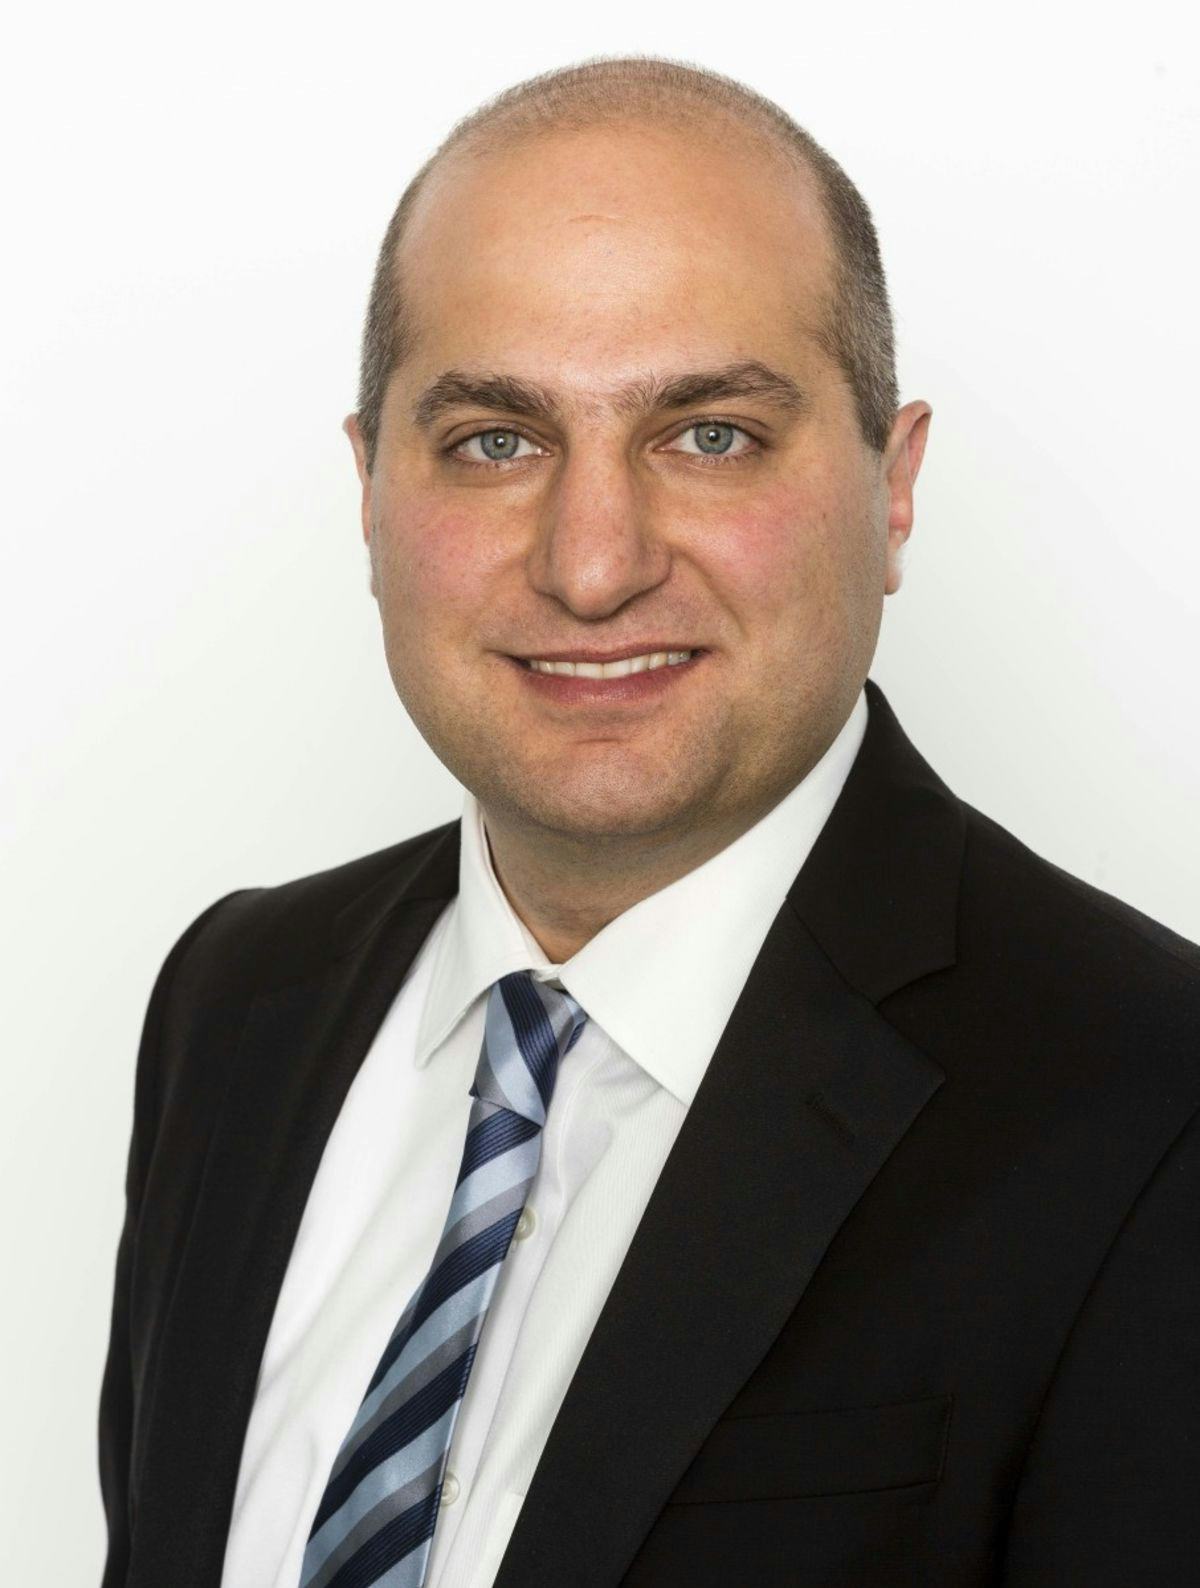 Behnood Gholami, CEO of Stevens' partner firm Autonomous Healthcare